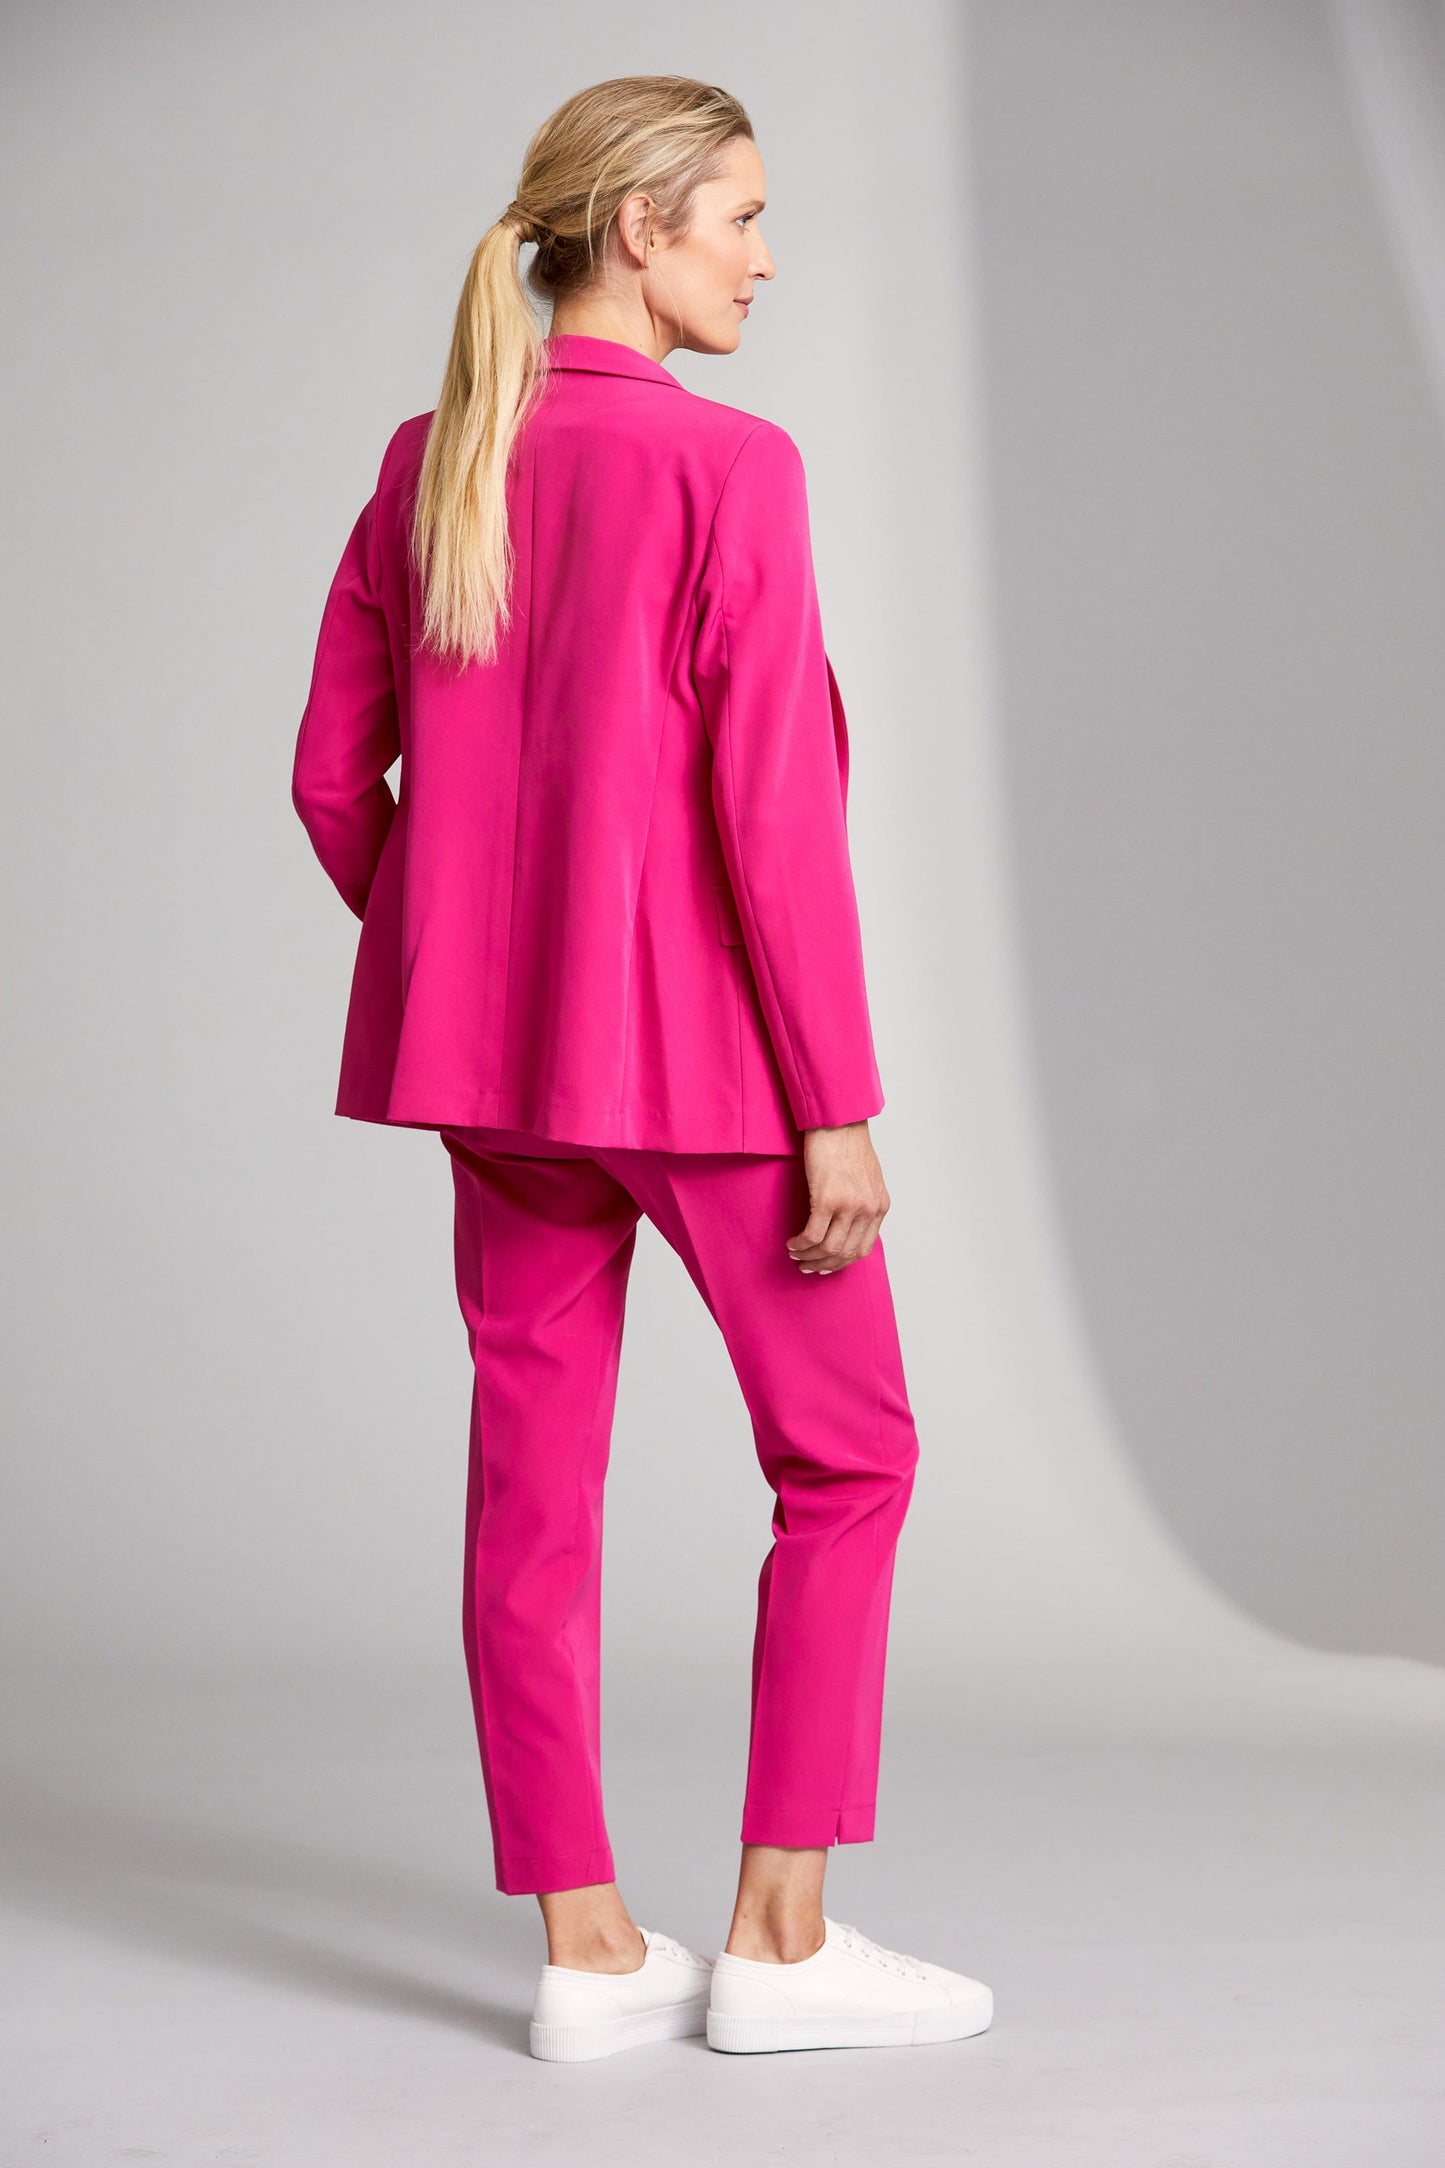 Peruzzi Pink Suit Trouser